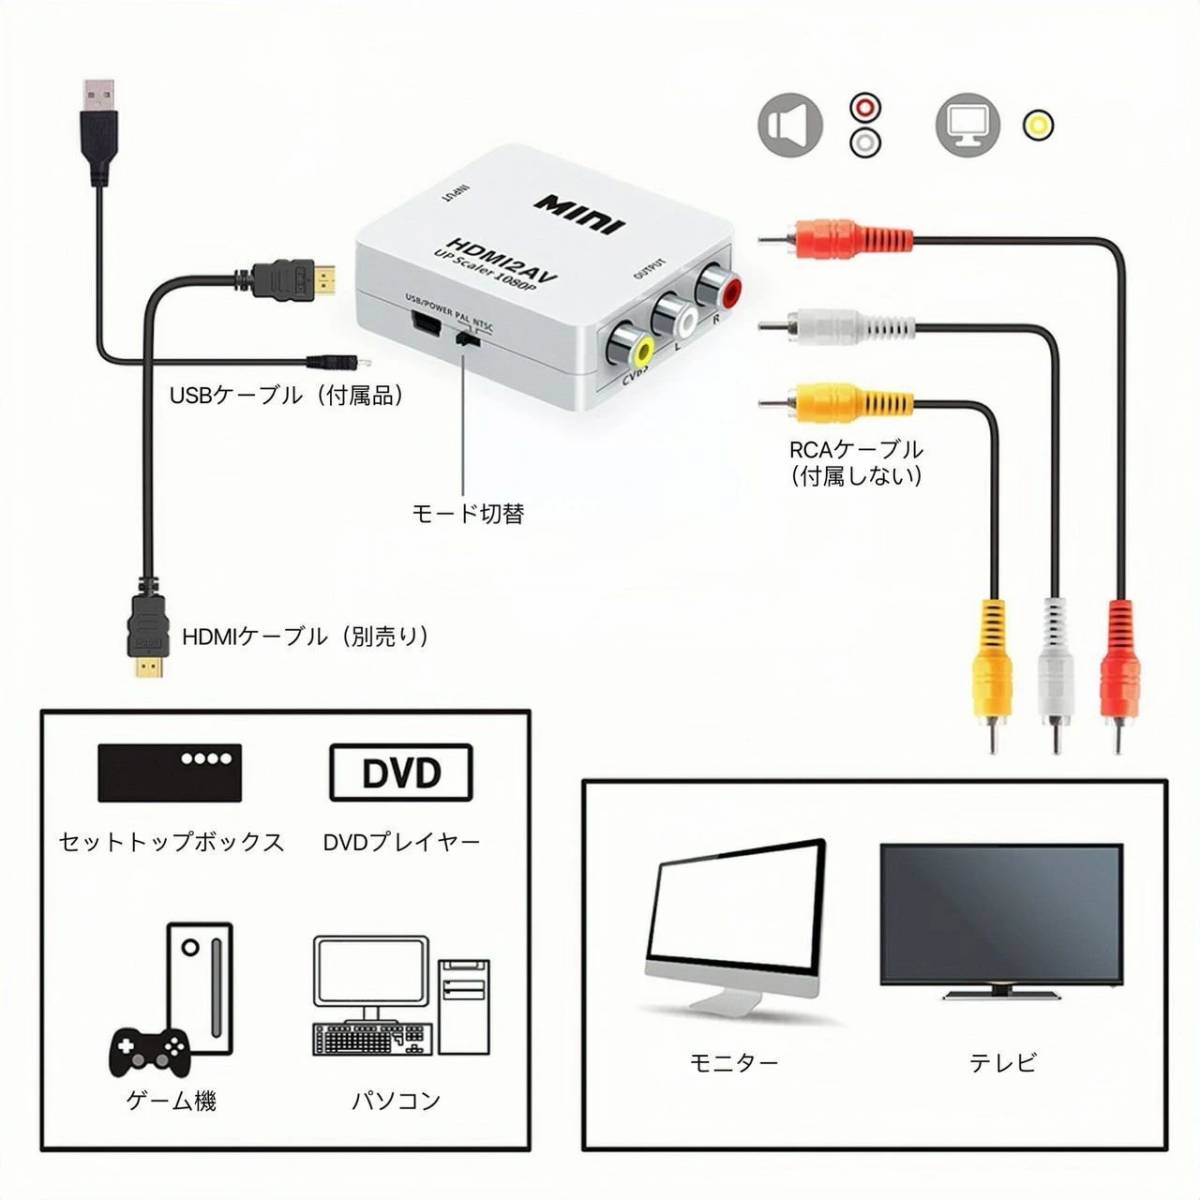 HDMI RCA 変換アダプタ HDMI to AV コンバーター アダプター HDMI AV コンポジット RCA変換アダプタ_画像3